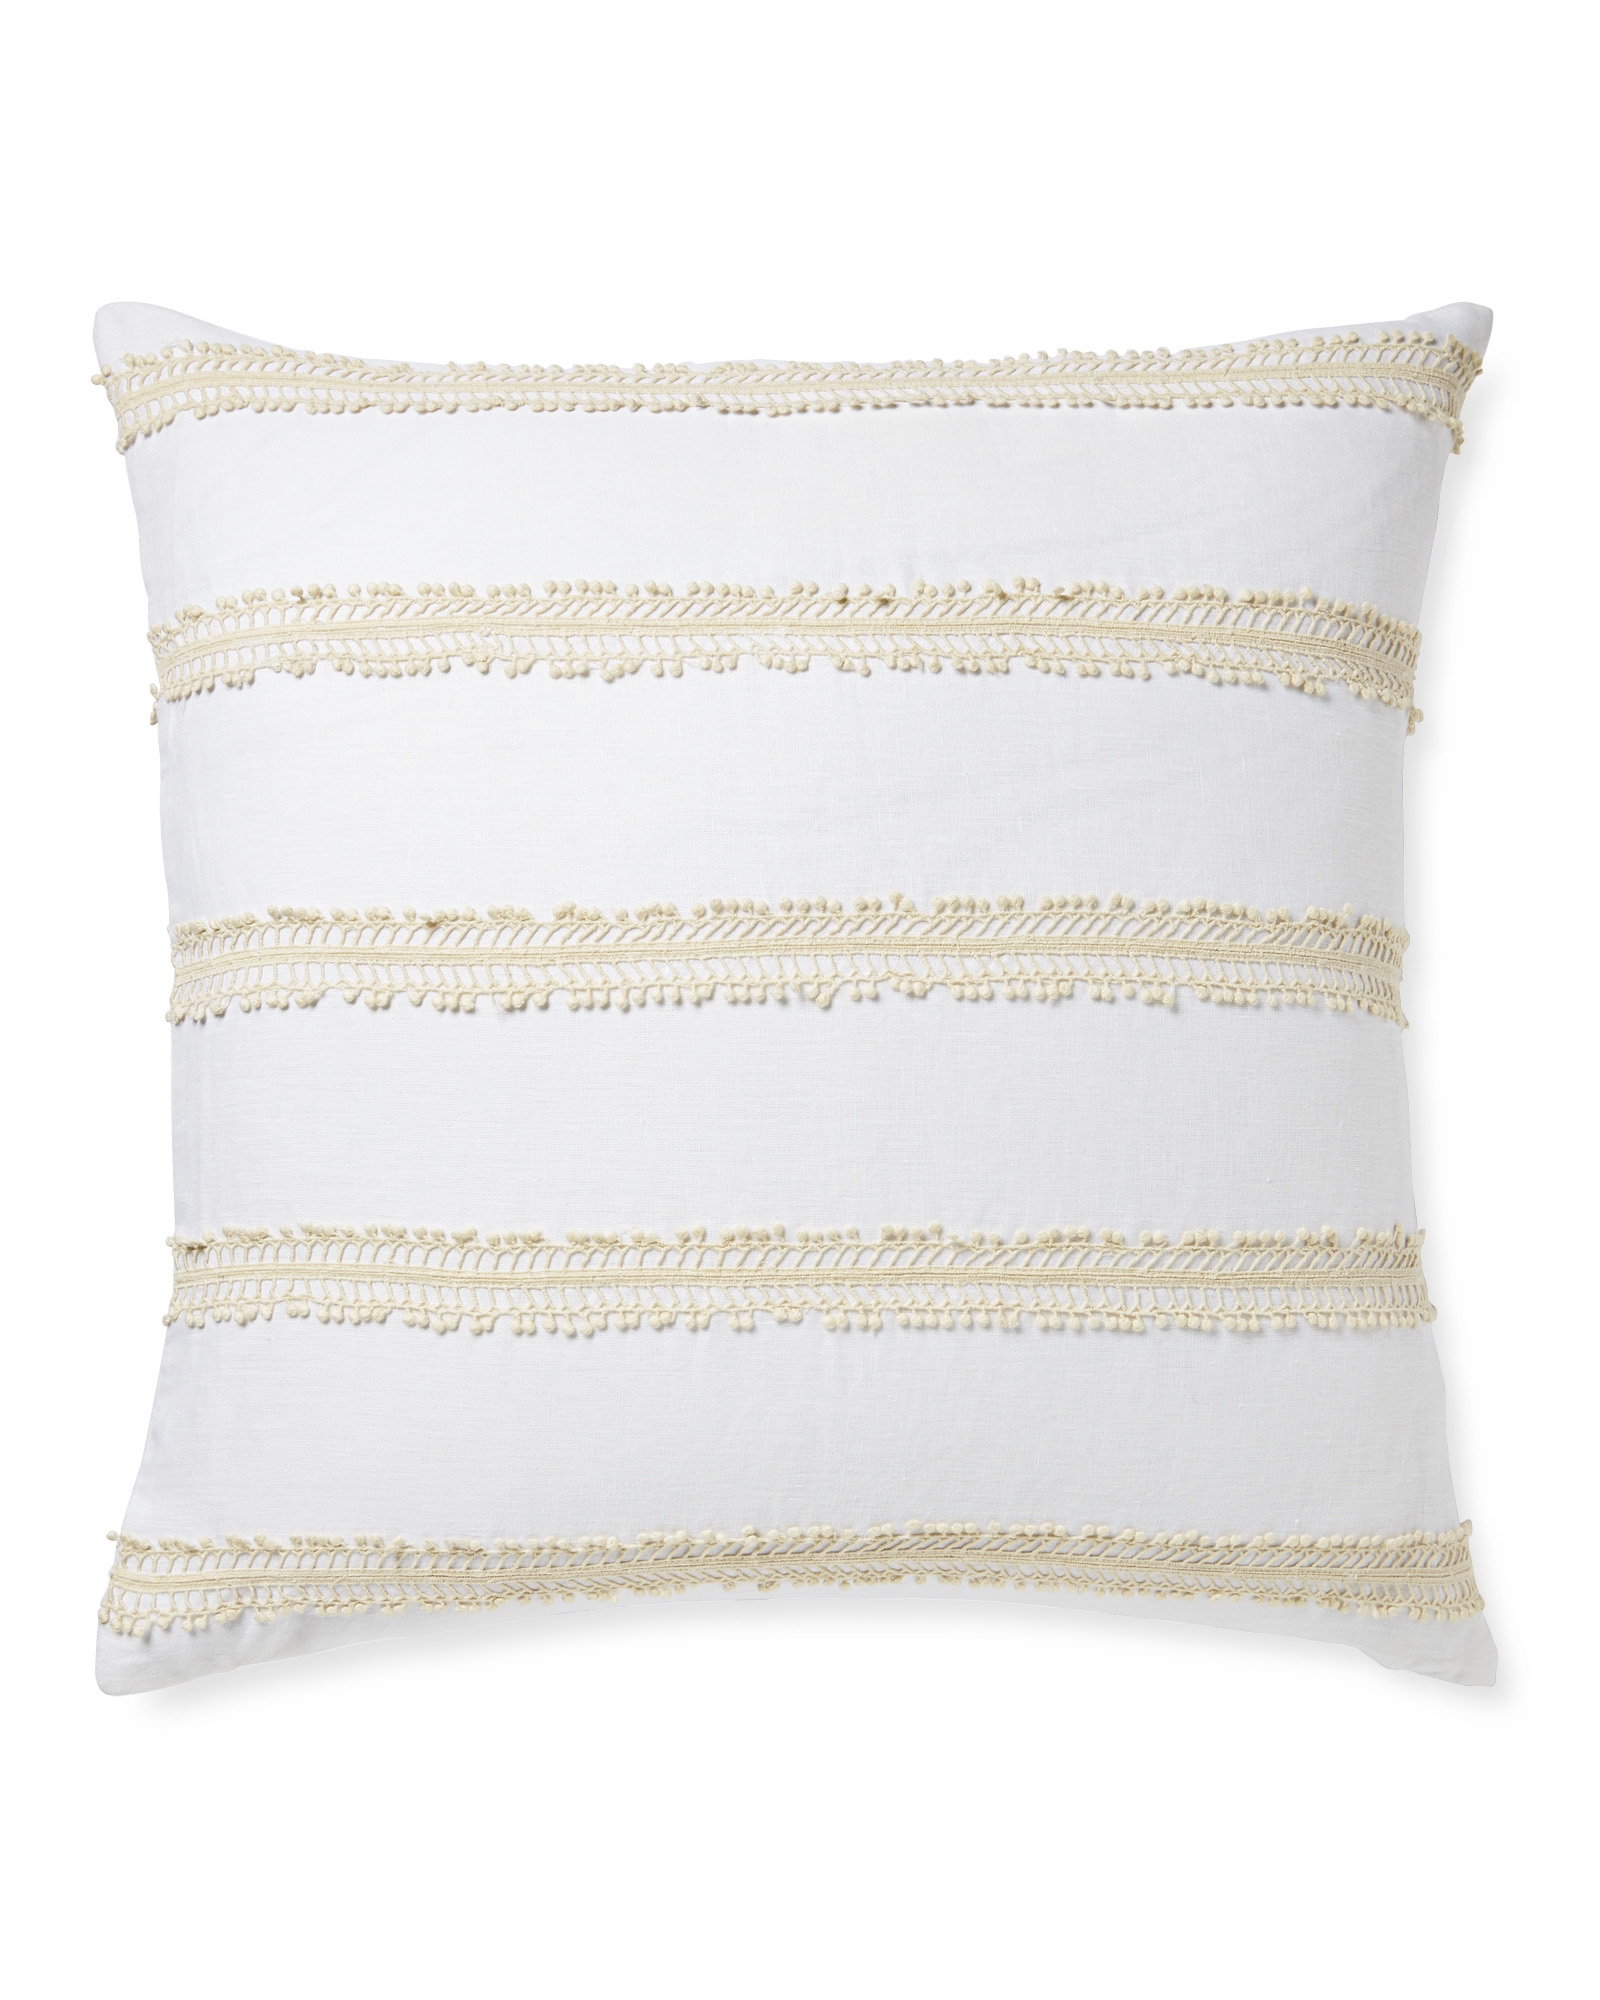 Sevilla Pillow Cover: White/Ivory - Image 0